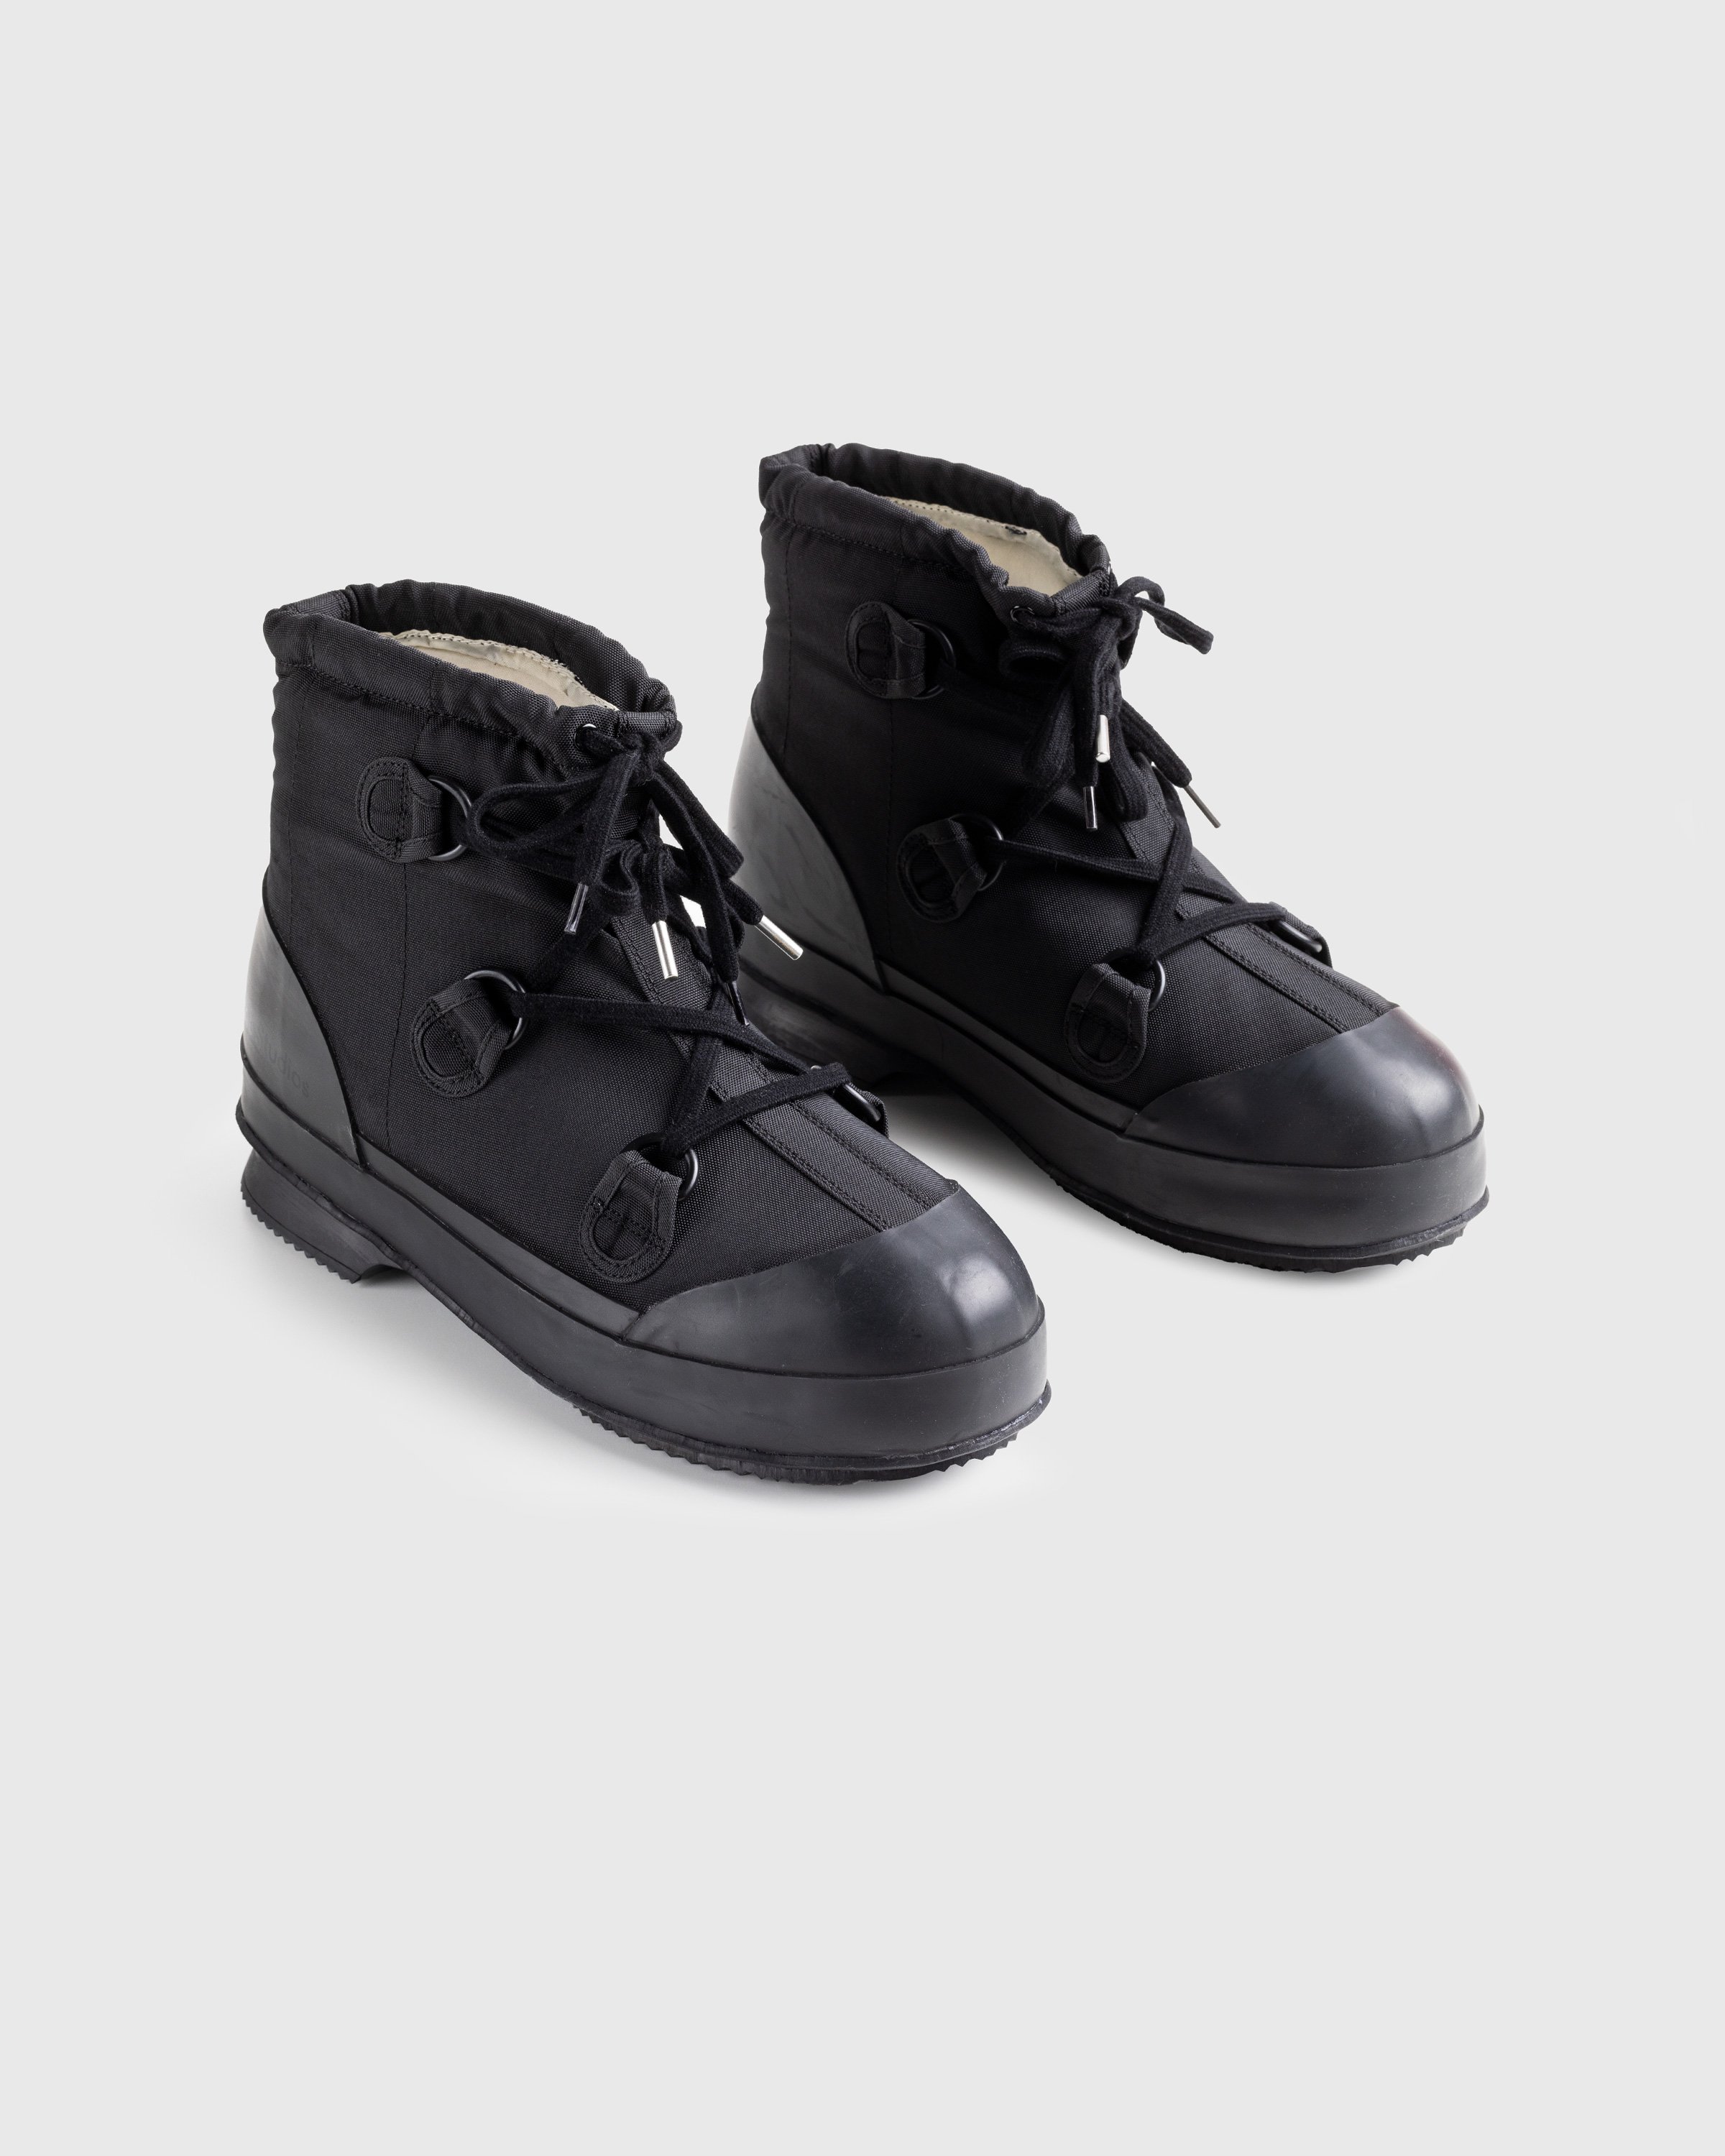 Acne Studios - Lace-Up Boots Black - Footwear - Black - Image 3